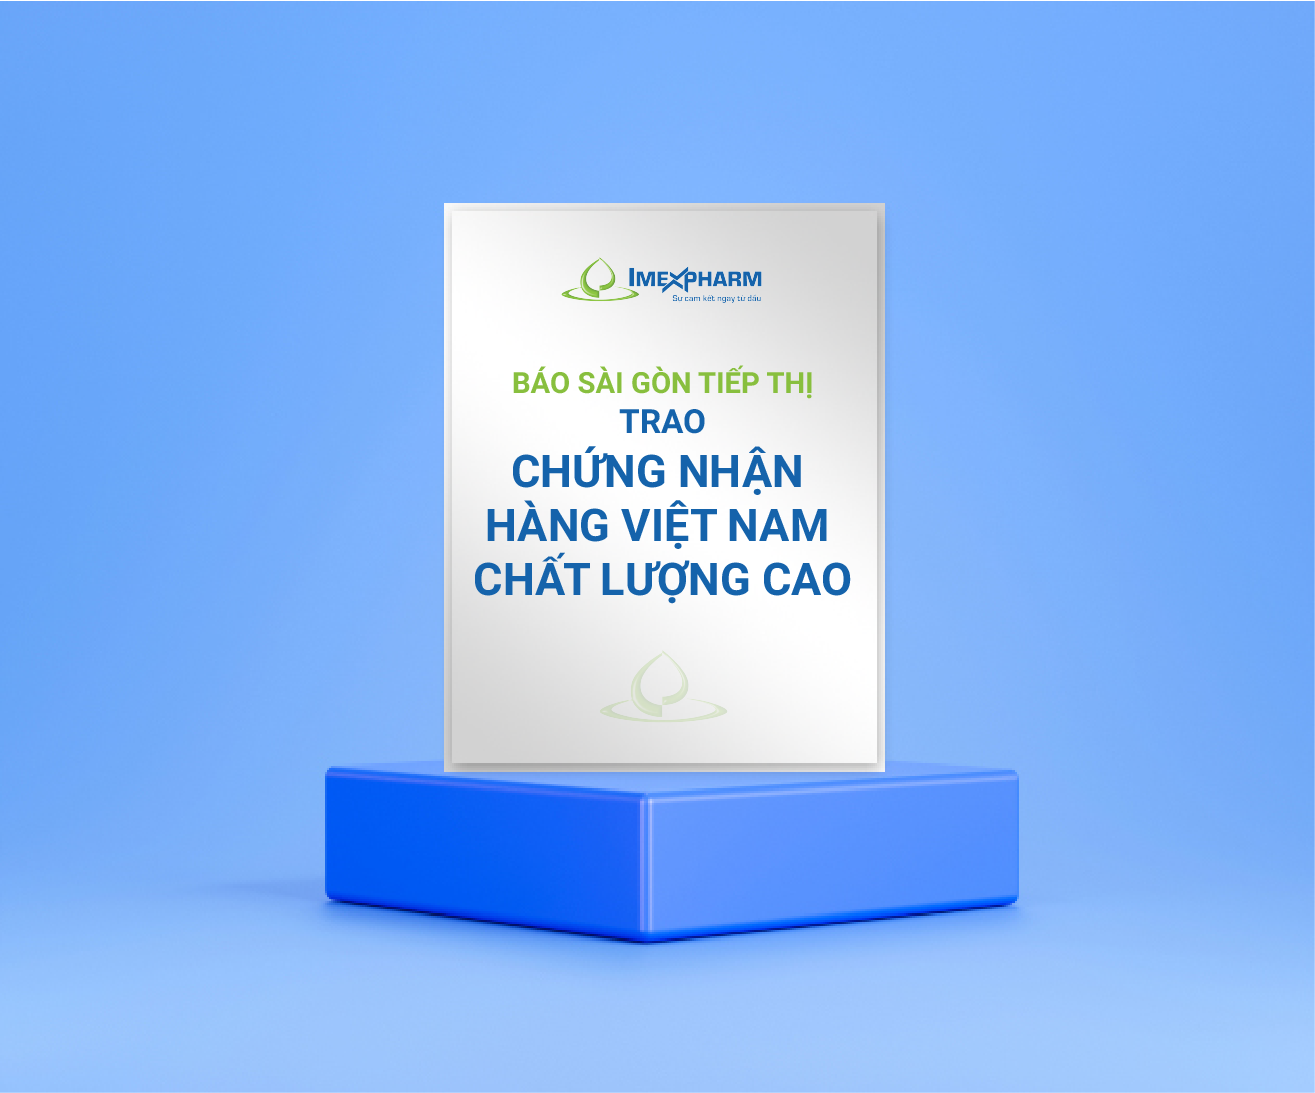 Saigon Marketing Newspaper awarded the certificate of High Quality Vietnamese Goods.